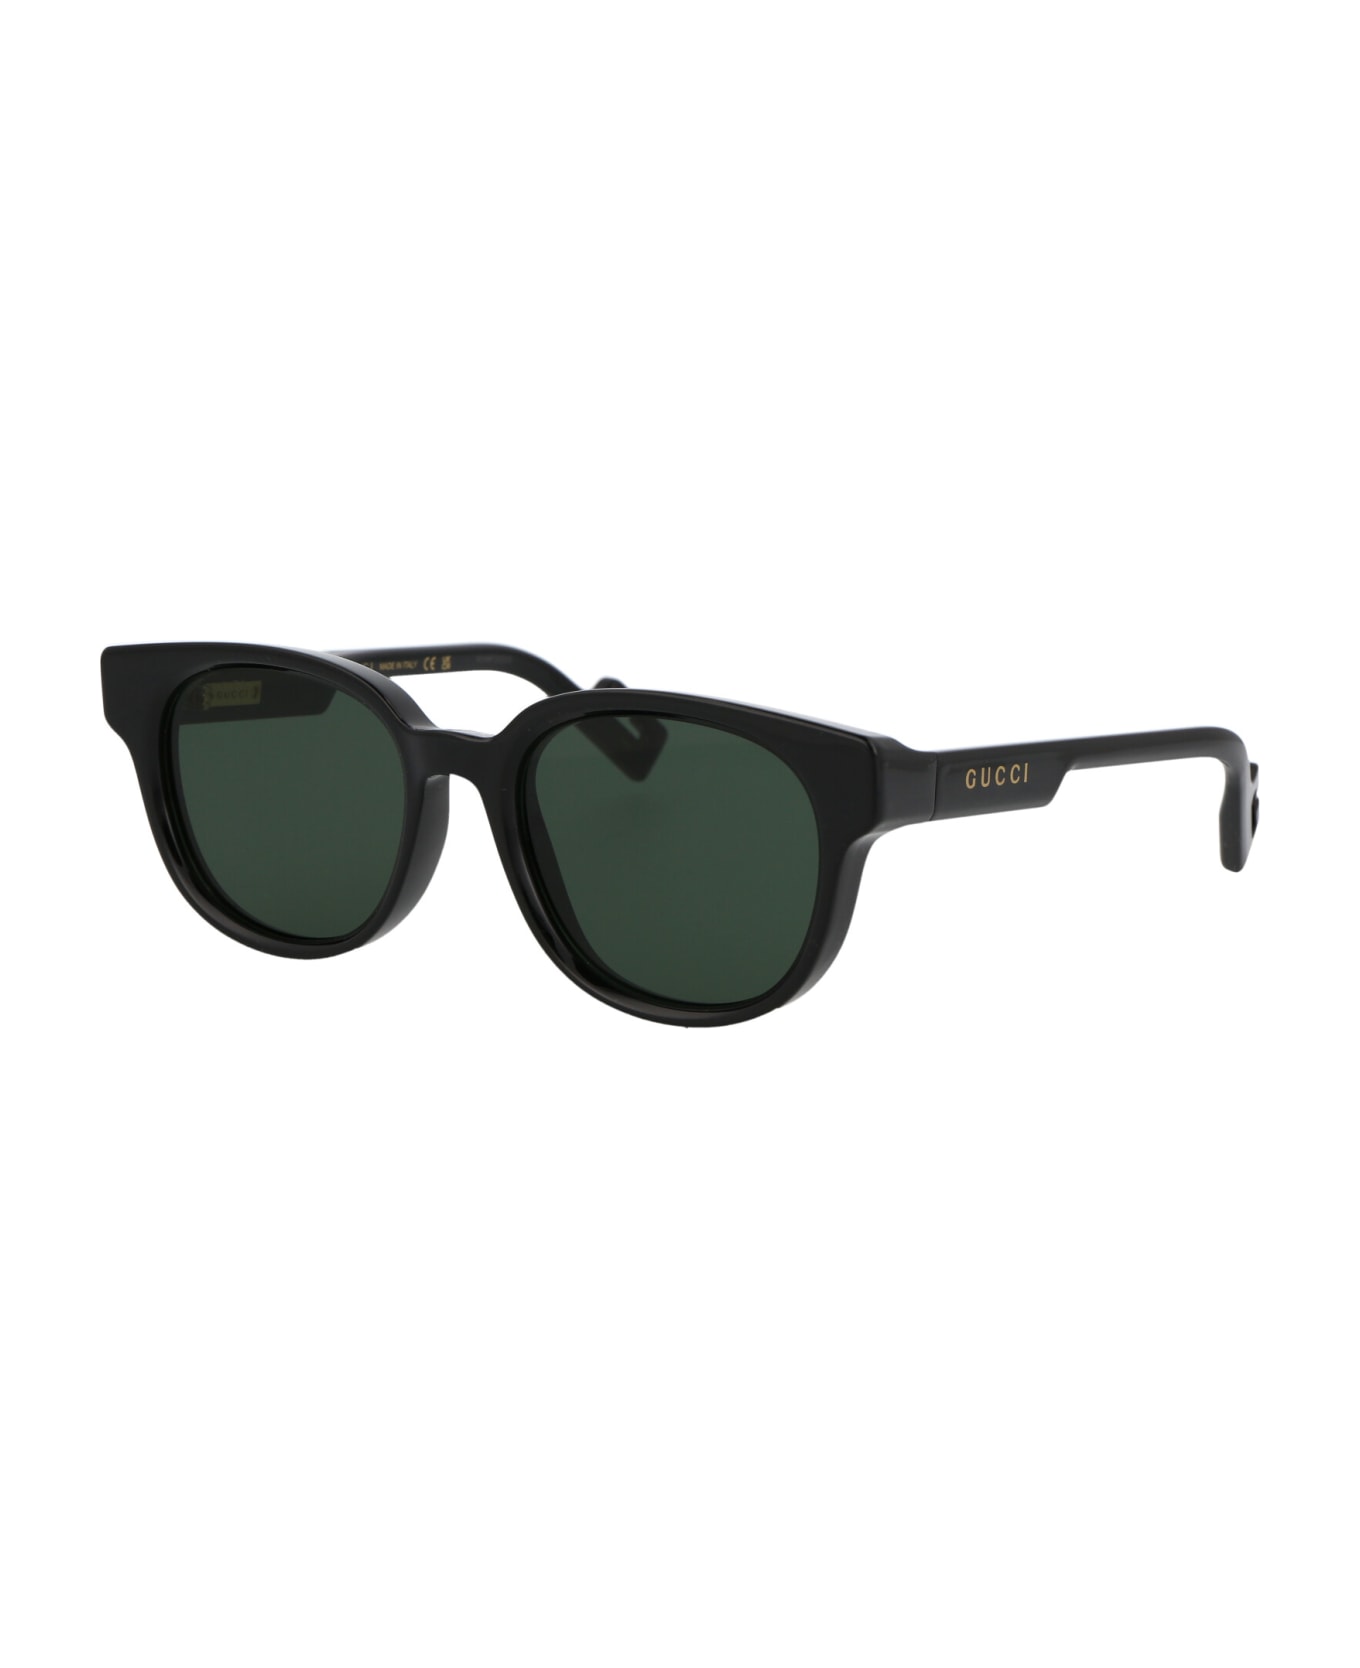 Gucci Eyewear Gg1237s Sunglasses - 004 BLACK BLACK GREEN